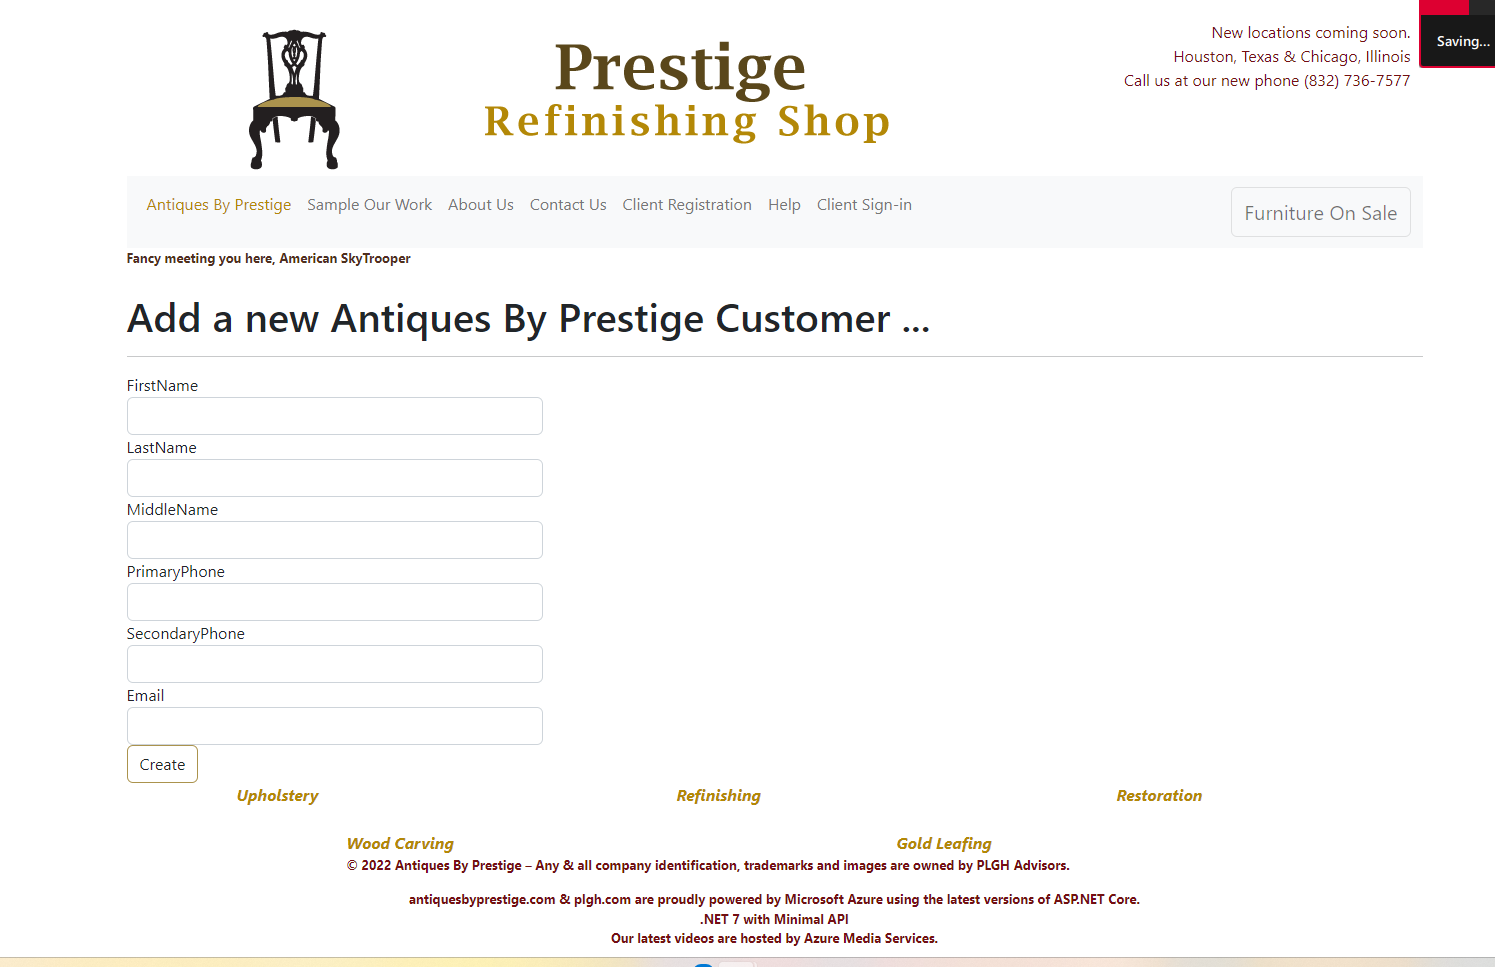 Antiques By Prestige Customer Management System